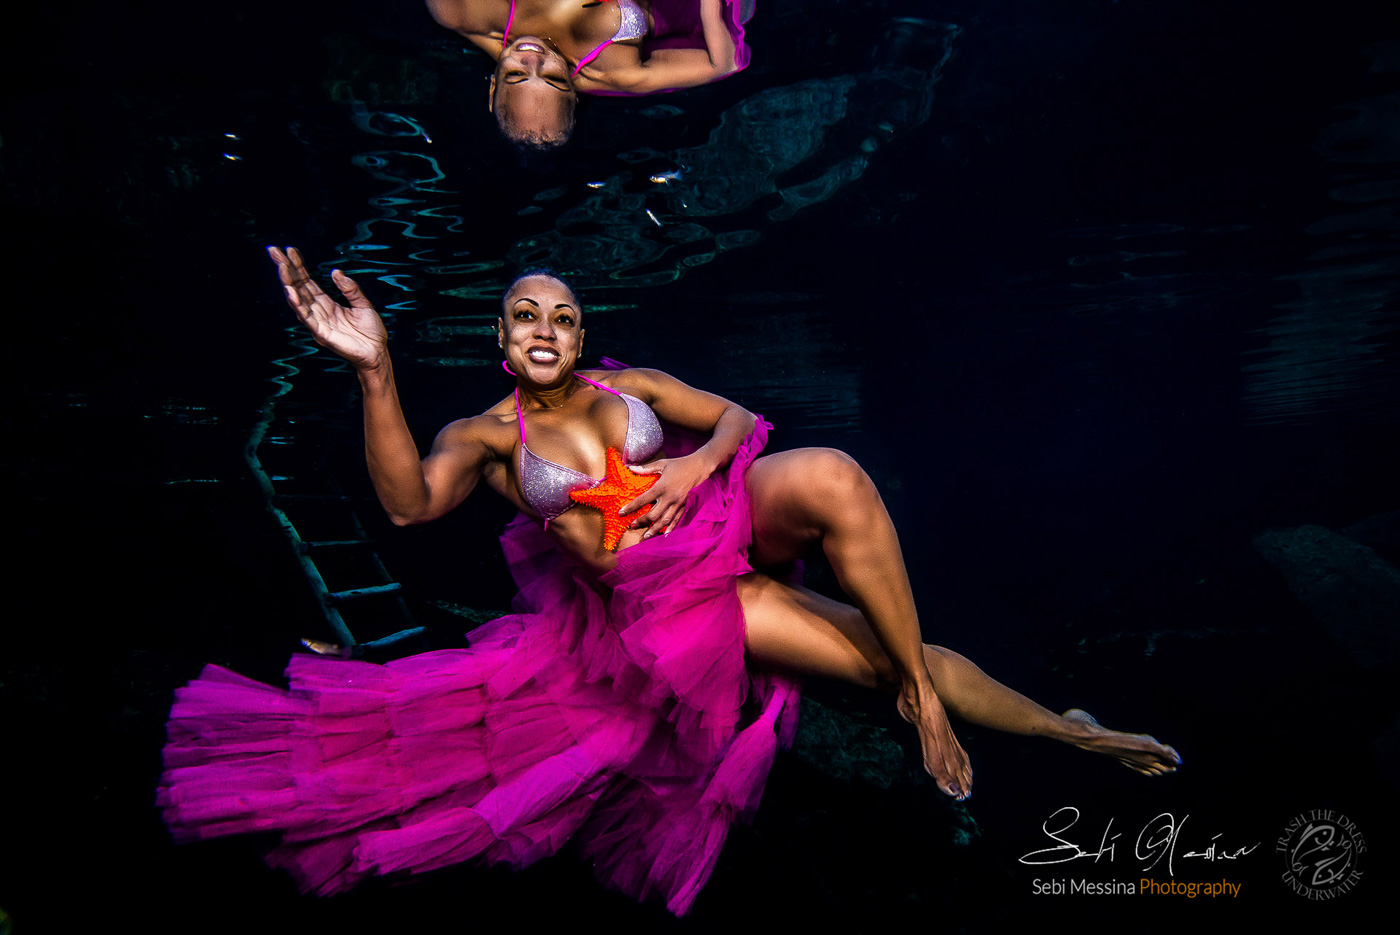 Underwater Cenote Photoshoots - Underwater Modeling Mexico - Sebi Messina Photography